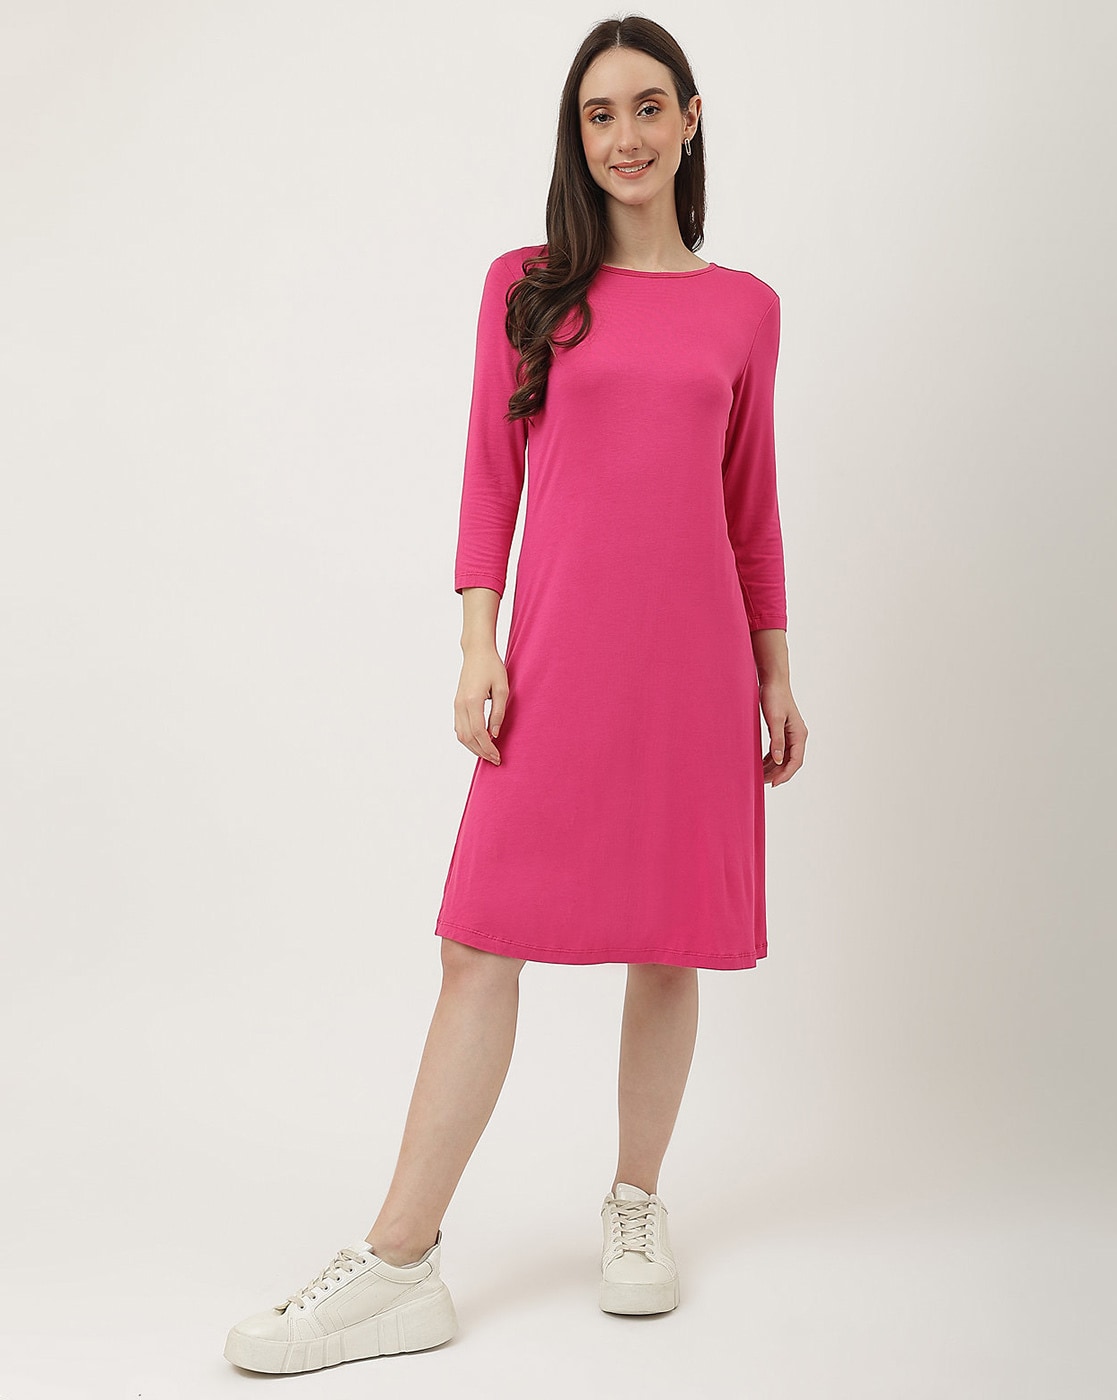 Hot Pink Satin A-line Spaghetti Straps Prom Dress MP645 | Musebridals